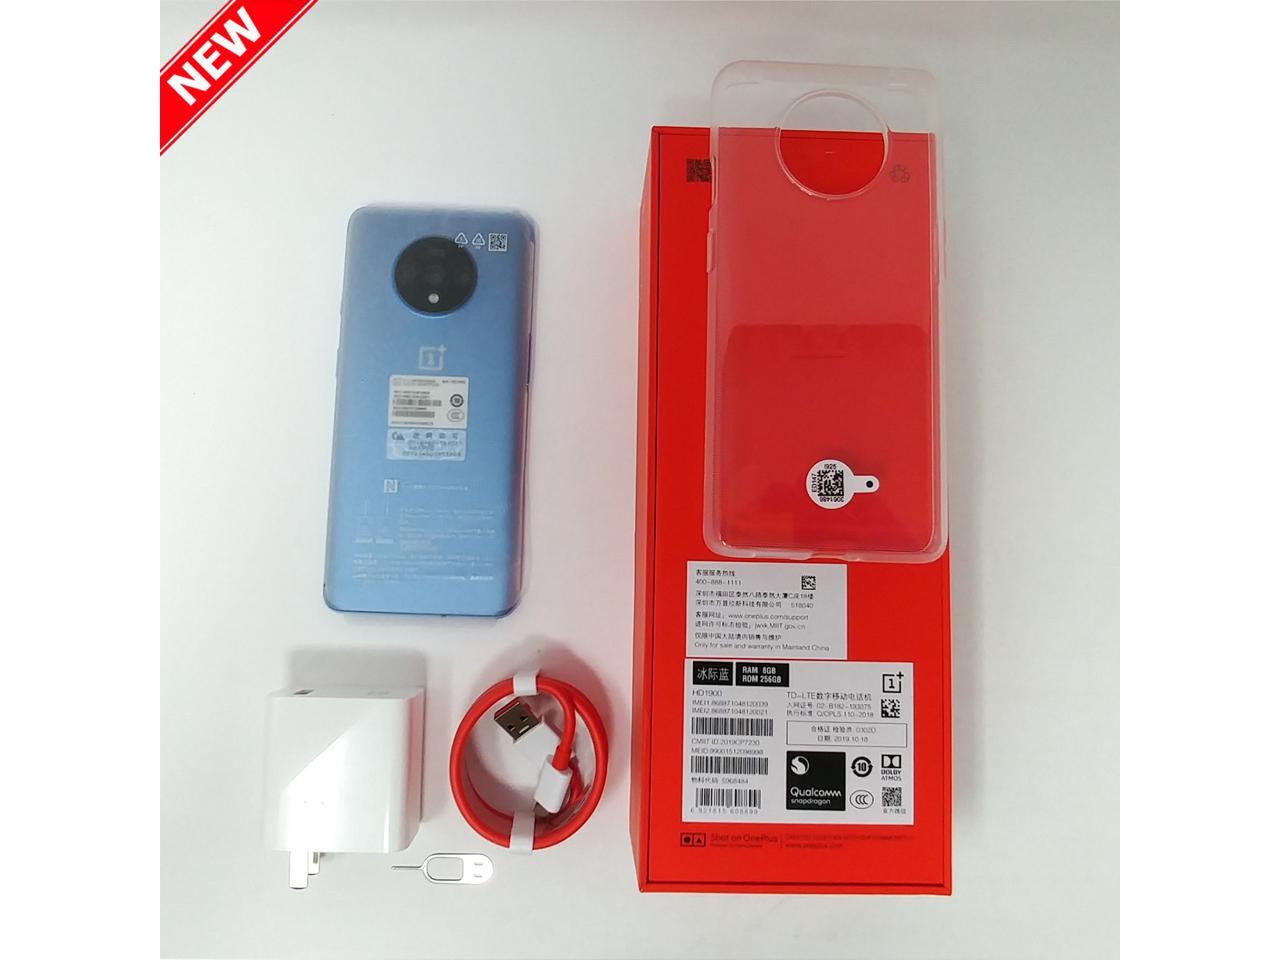 OnePlus 7T 256GB HD1900 GSM Factory Unlocked 4G LTE 6.55\" Fluid Display 8GB RAM 48 MP Ultra Wide Triple Camera Smartphone - Glacier Blue - International Version